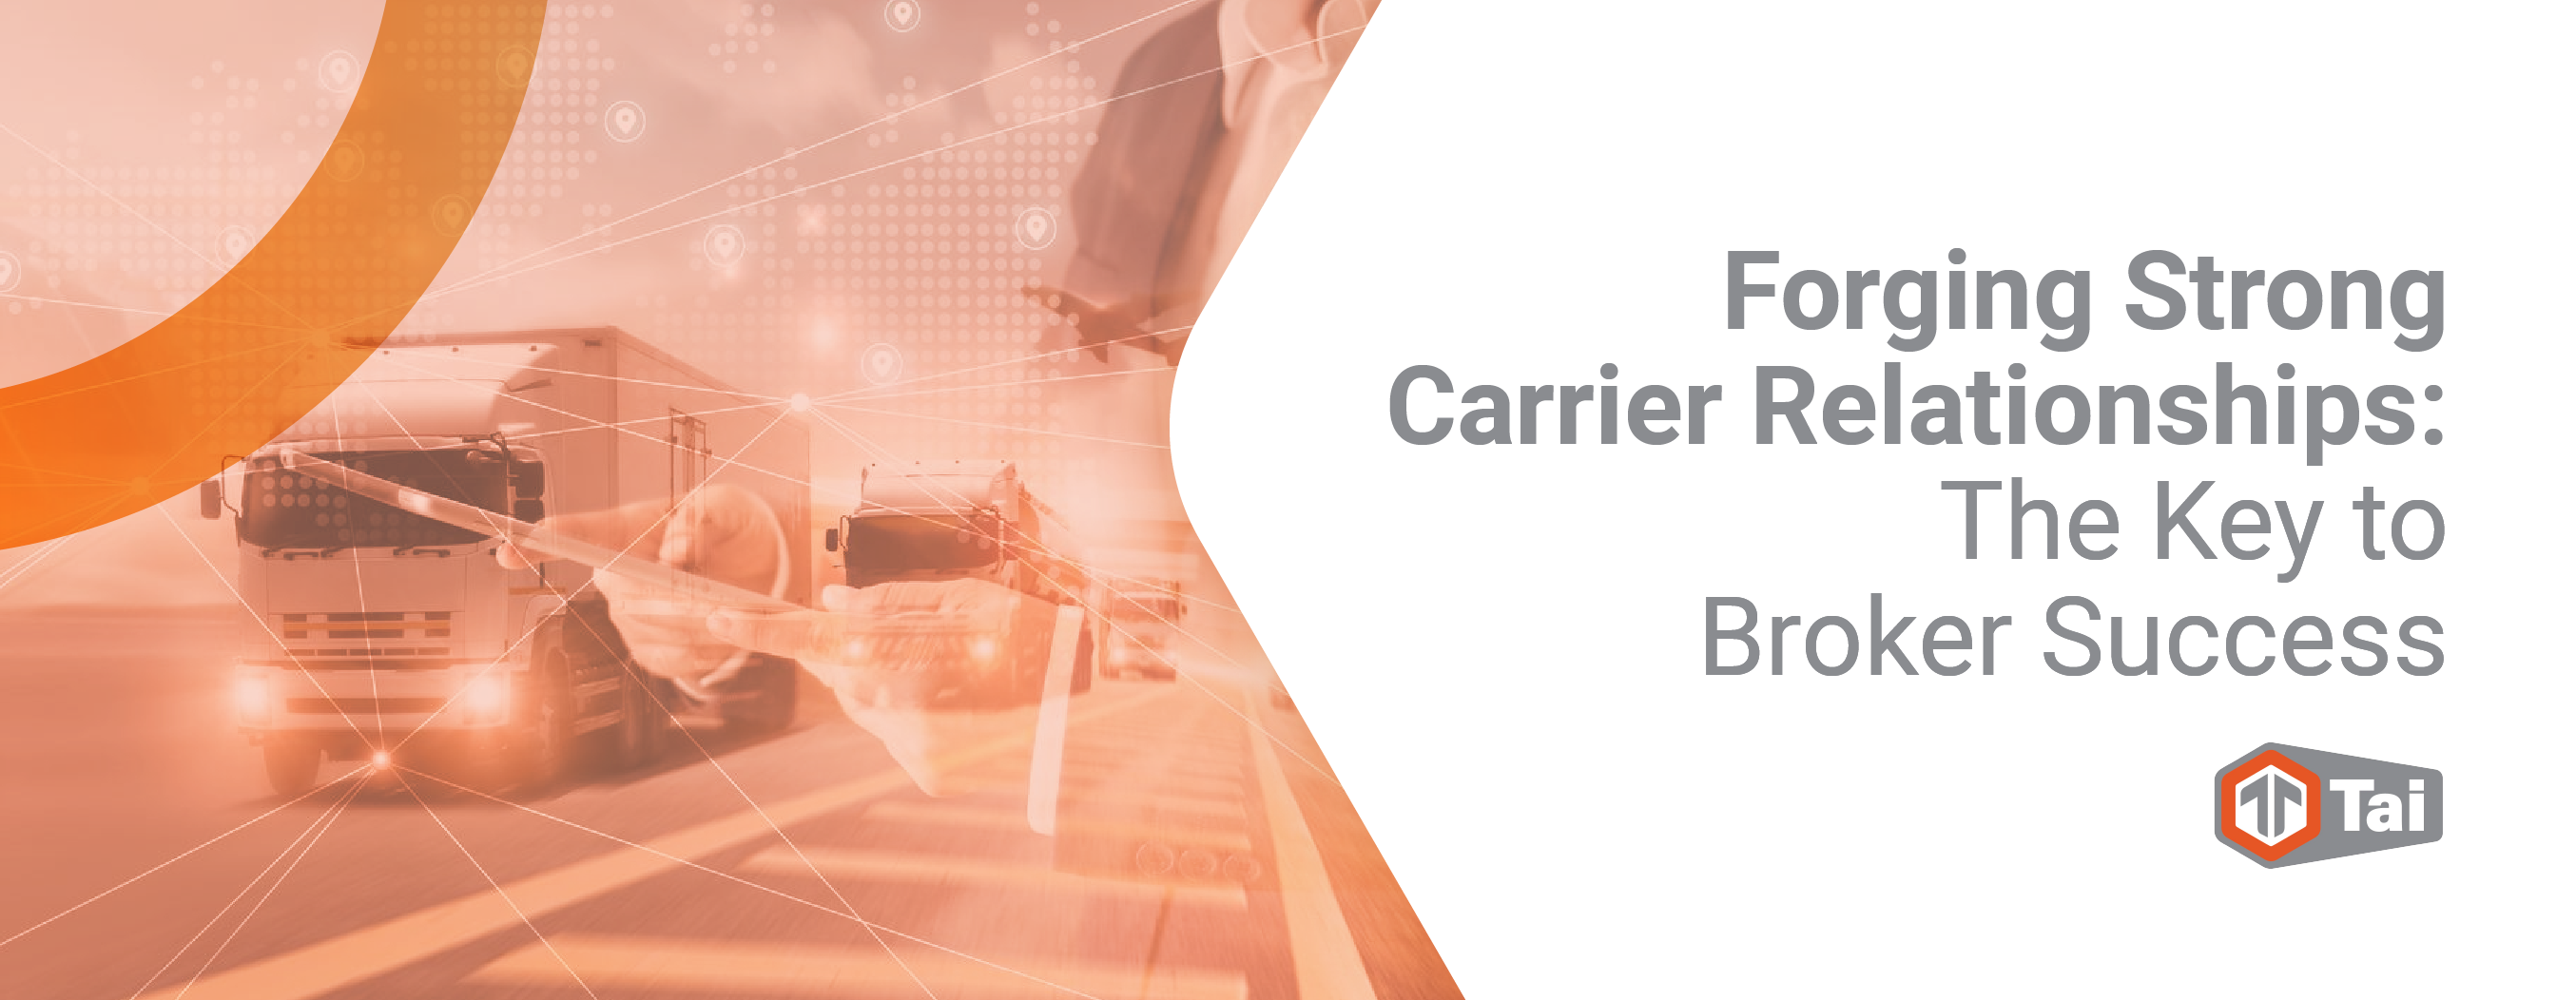 Modern Technology: The Key to Long-Lasting Broker-Carrier Partnerships